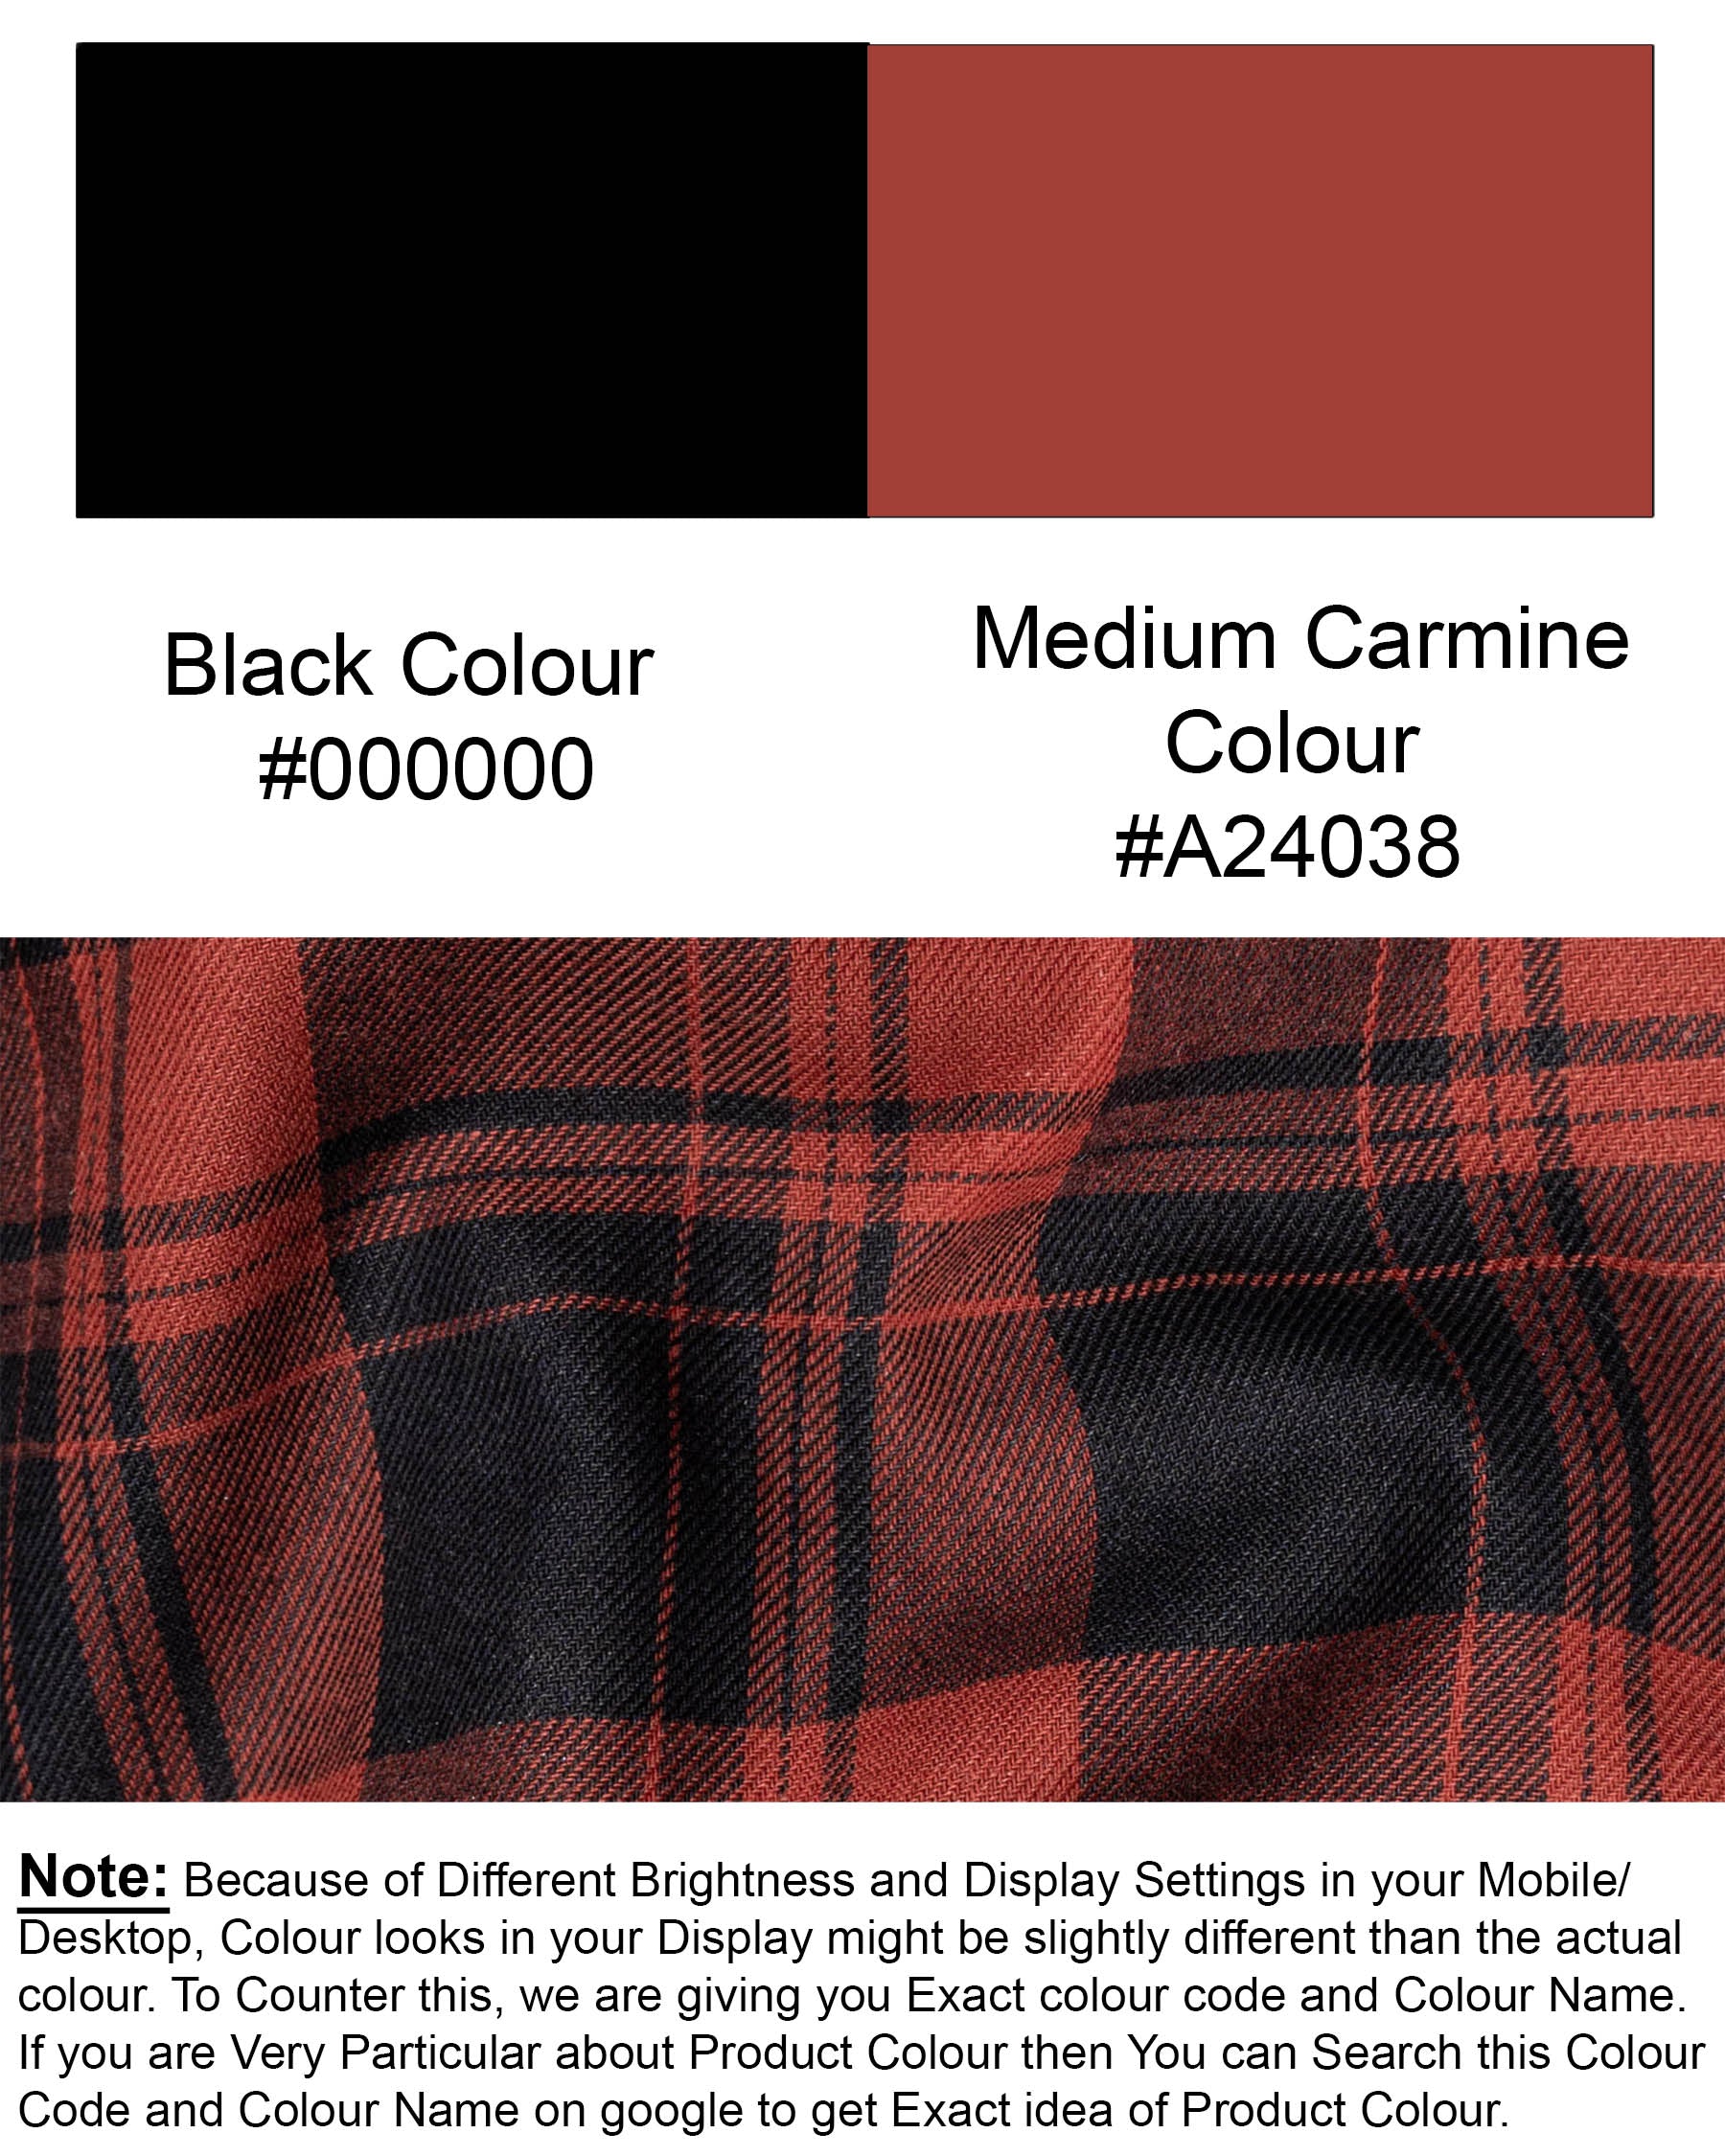 Jade Black and Medium Carmine Twill Plaid Premium Cotton Shirt 6373-M-38,6373-M-H-38,6373-M-39,6373-M-H-39,6373-M-40,6373-M-H-40,6373-M-42,6373-M-H-42,6373-M-44,6373-M-H-44,6373-M-46,6373-M-H-46,6373-M-48,6373-M-H-48,6373-M-50,6373-M-H-50,6373-M-52,6373-M-H-52AC